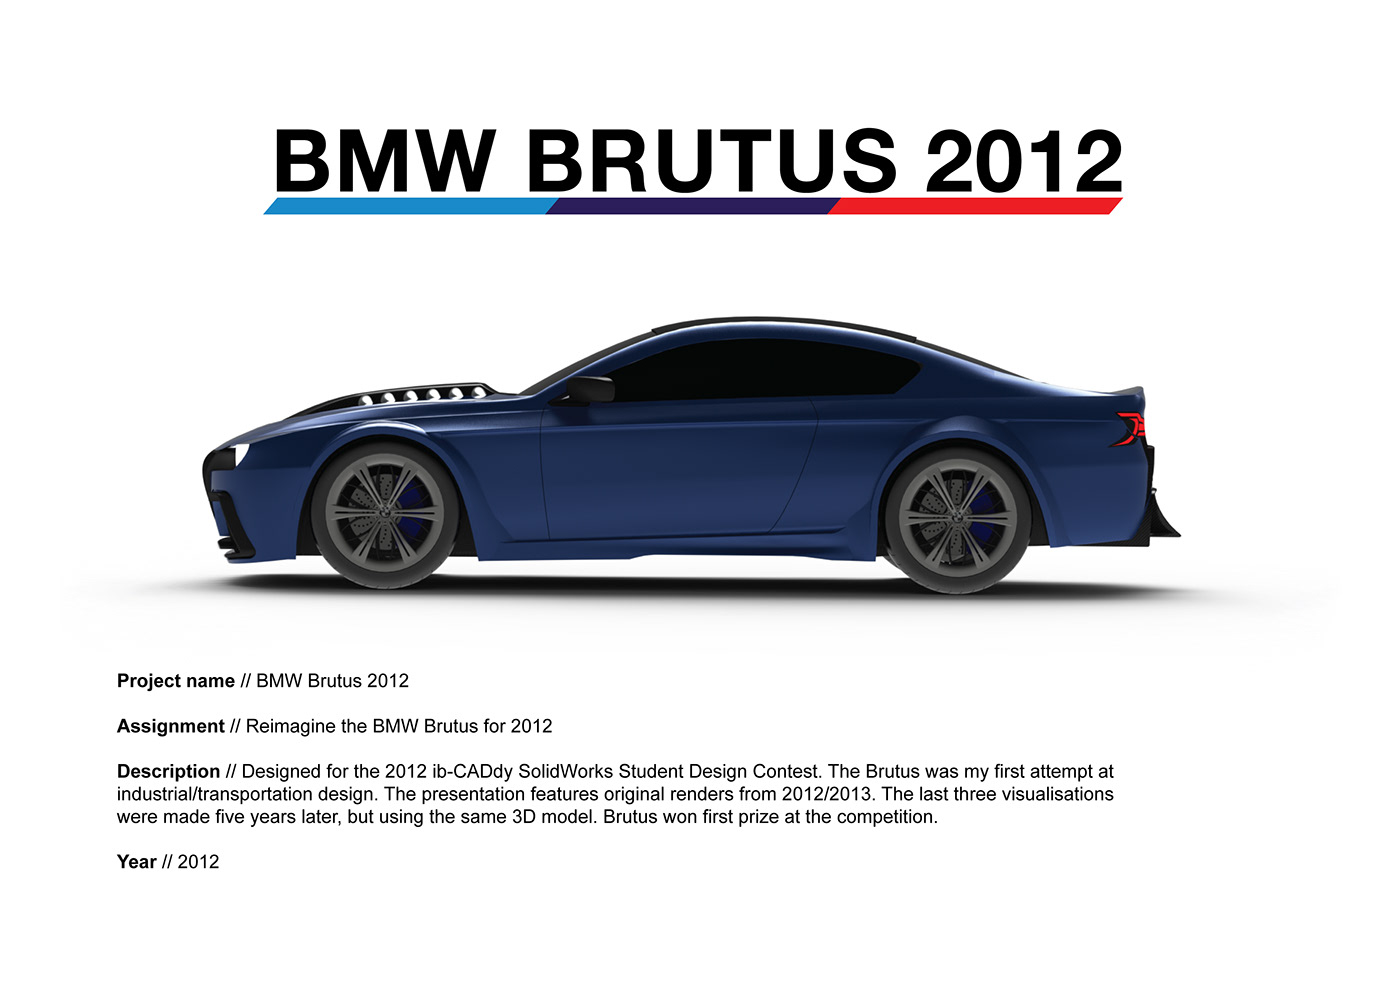 BMW brutus v12 prototype m6